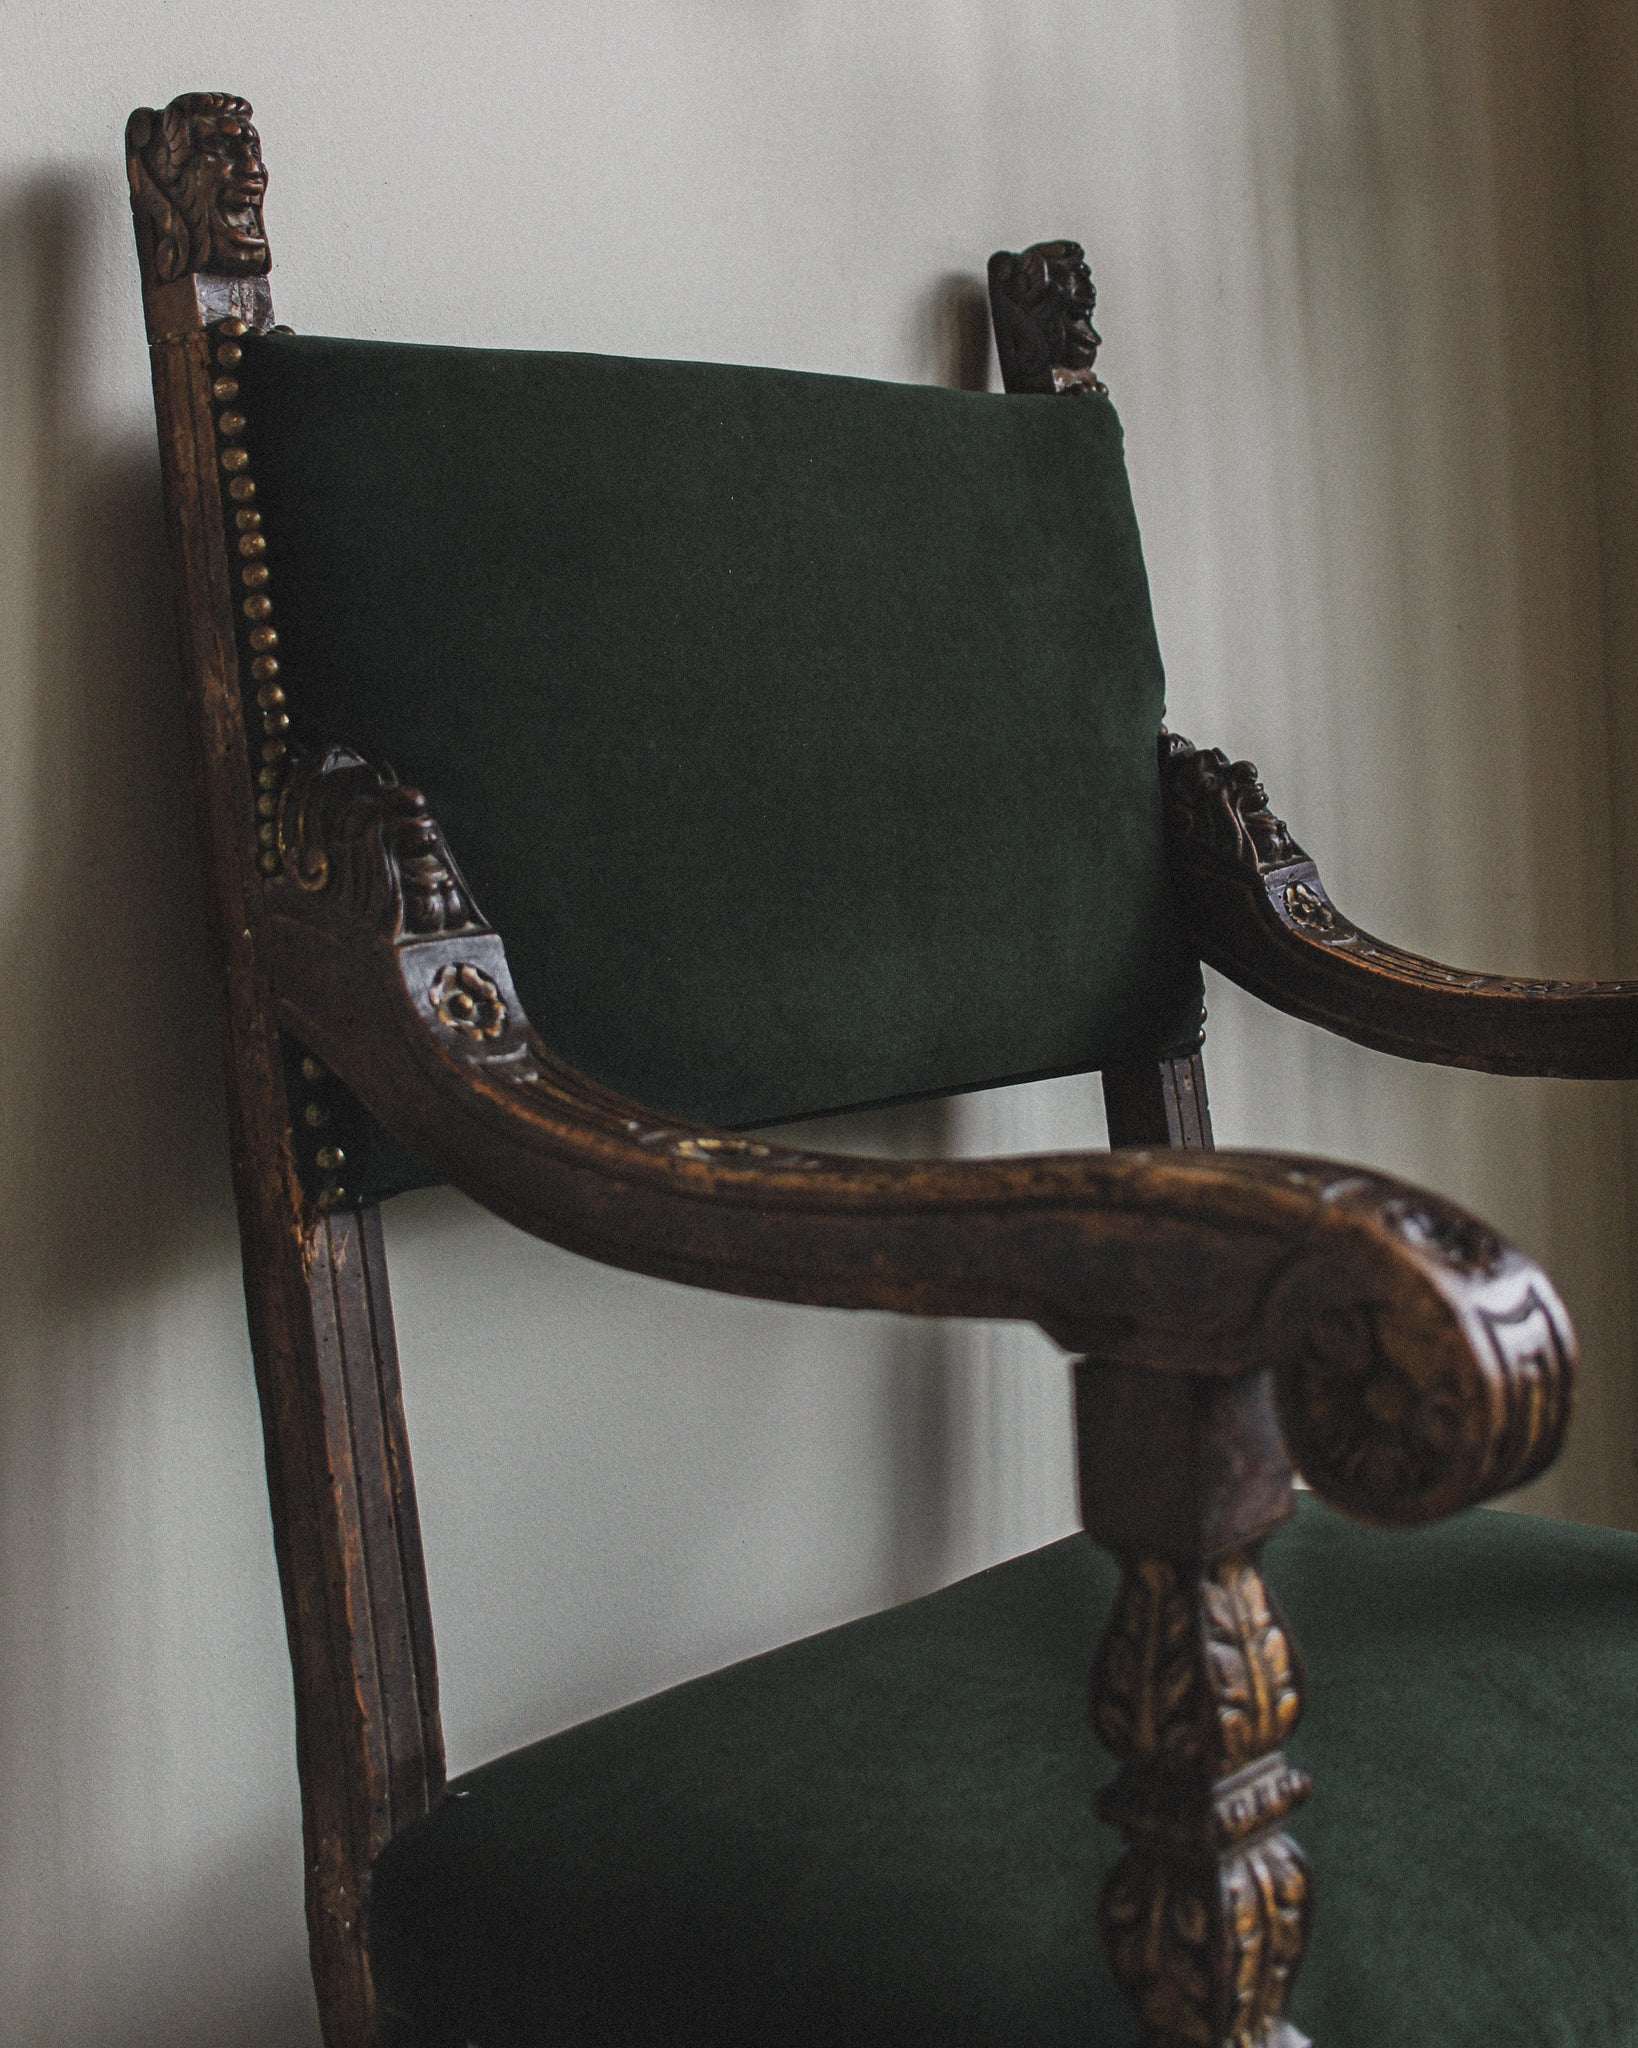 Spanish Throne Chair